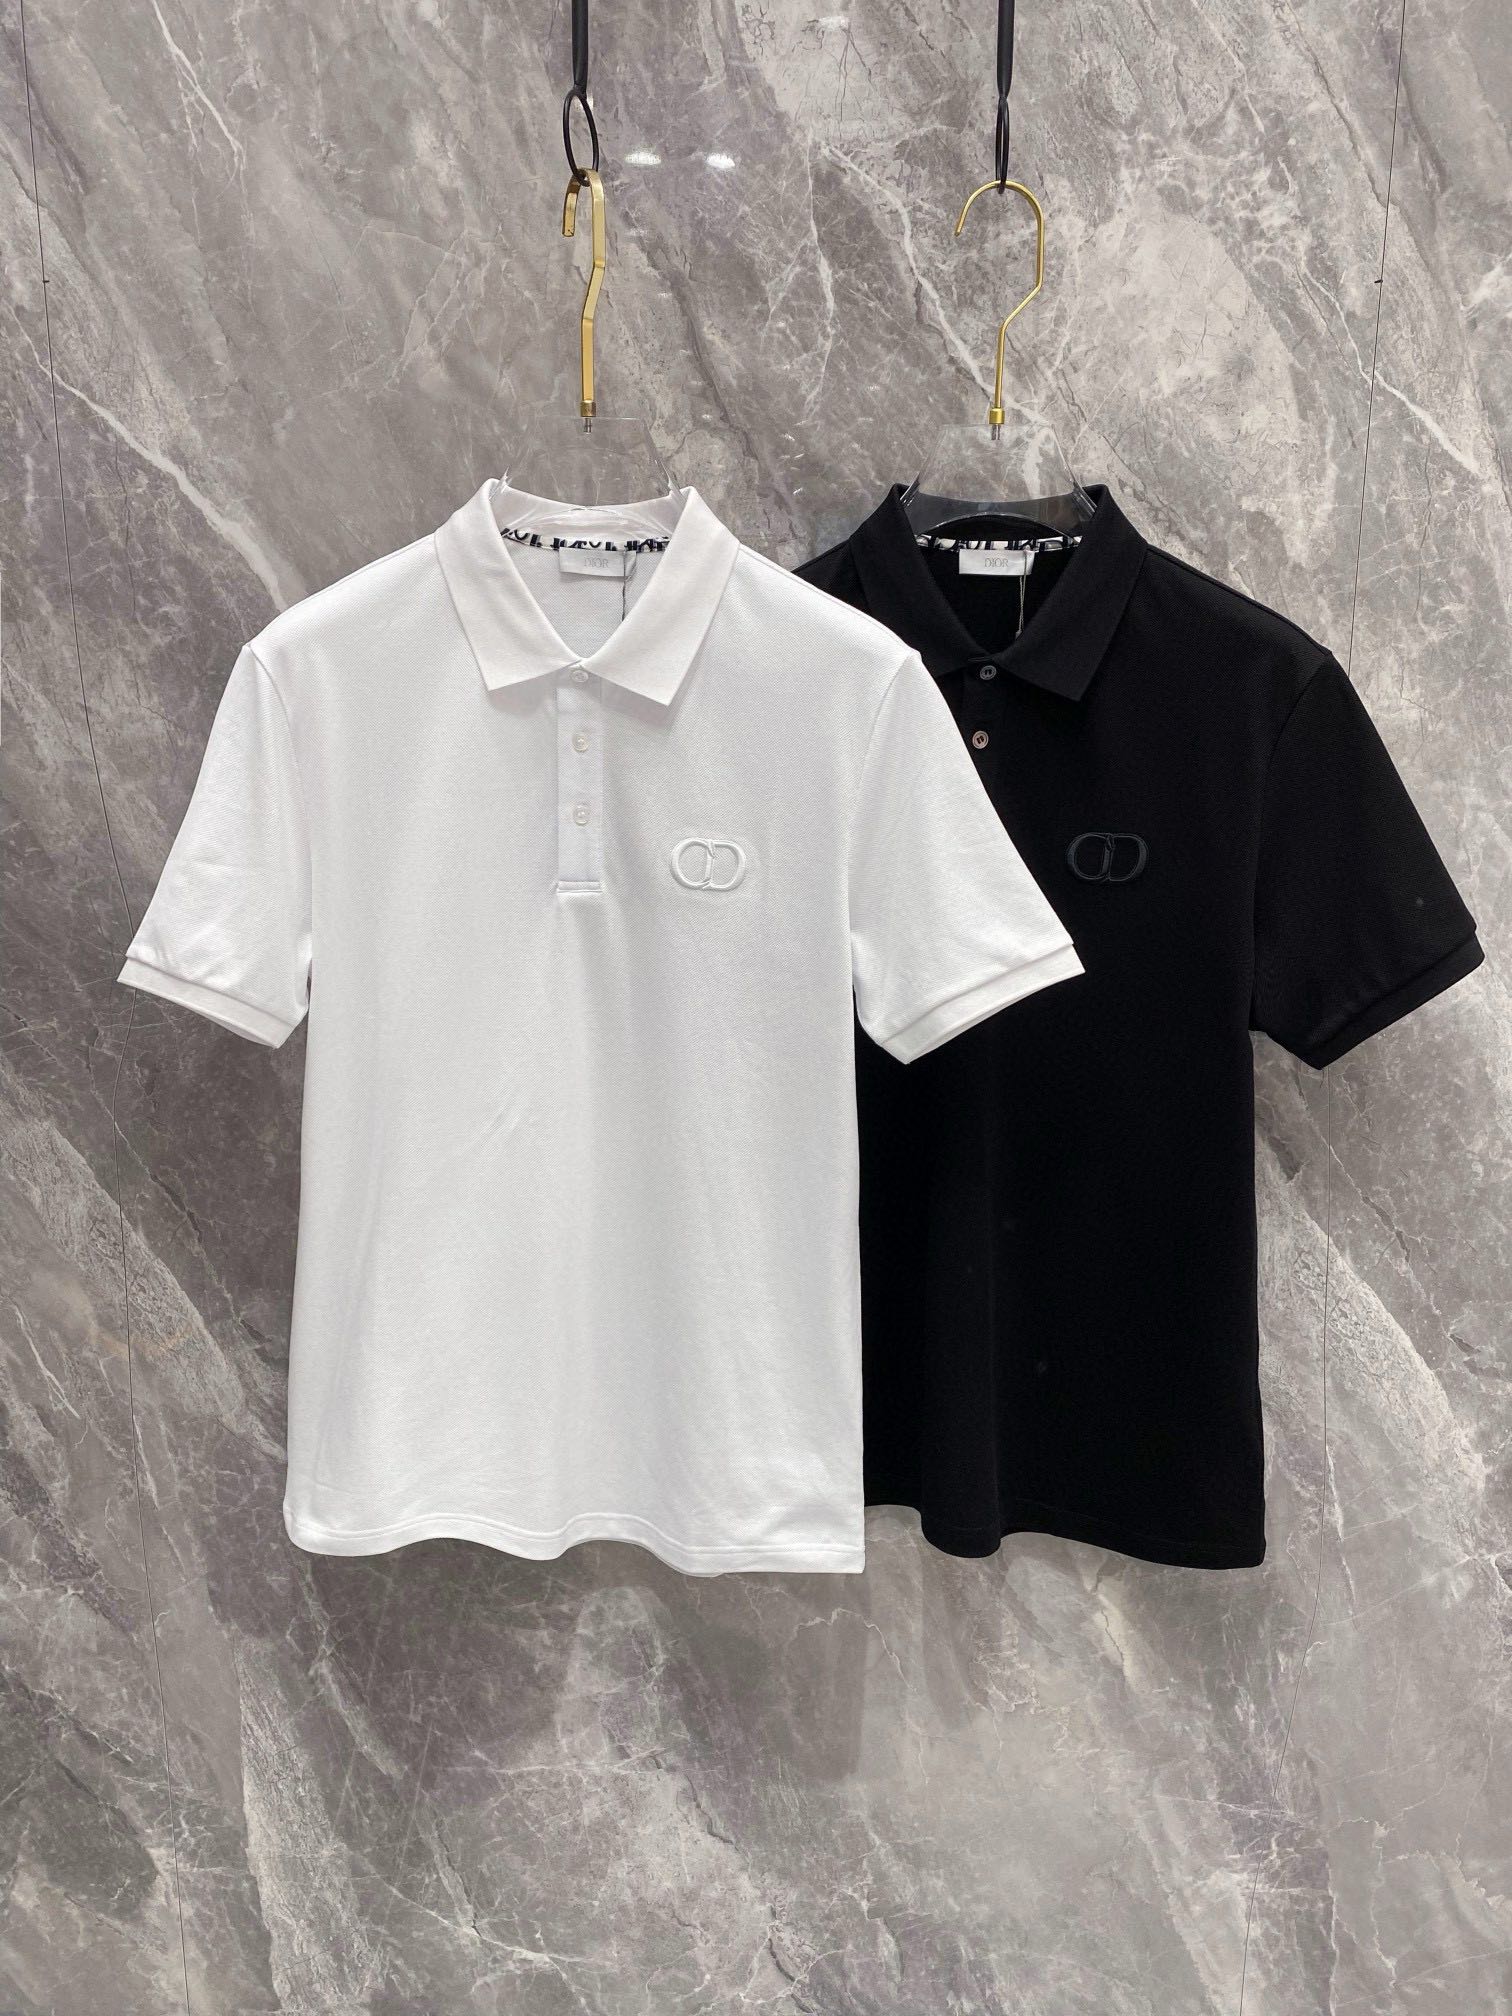 Dior Clothing Polo T-Shirt Online Sale
 Black White Men Cotton Summer Collection Fashion